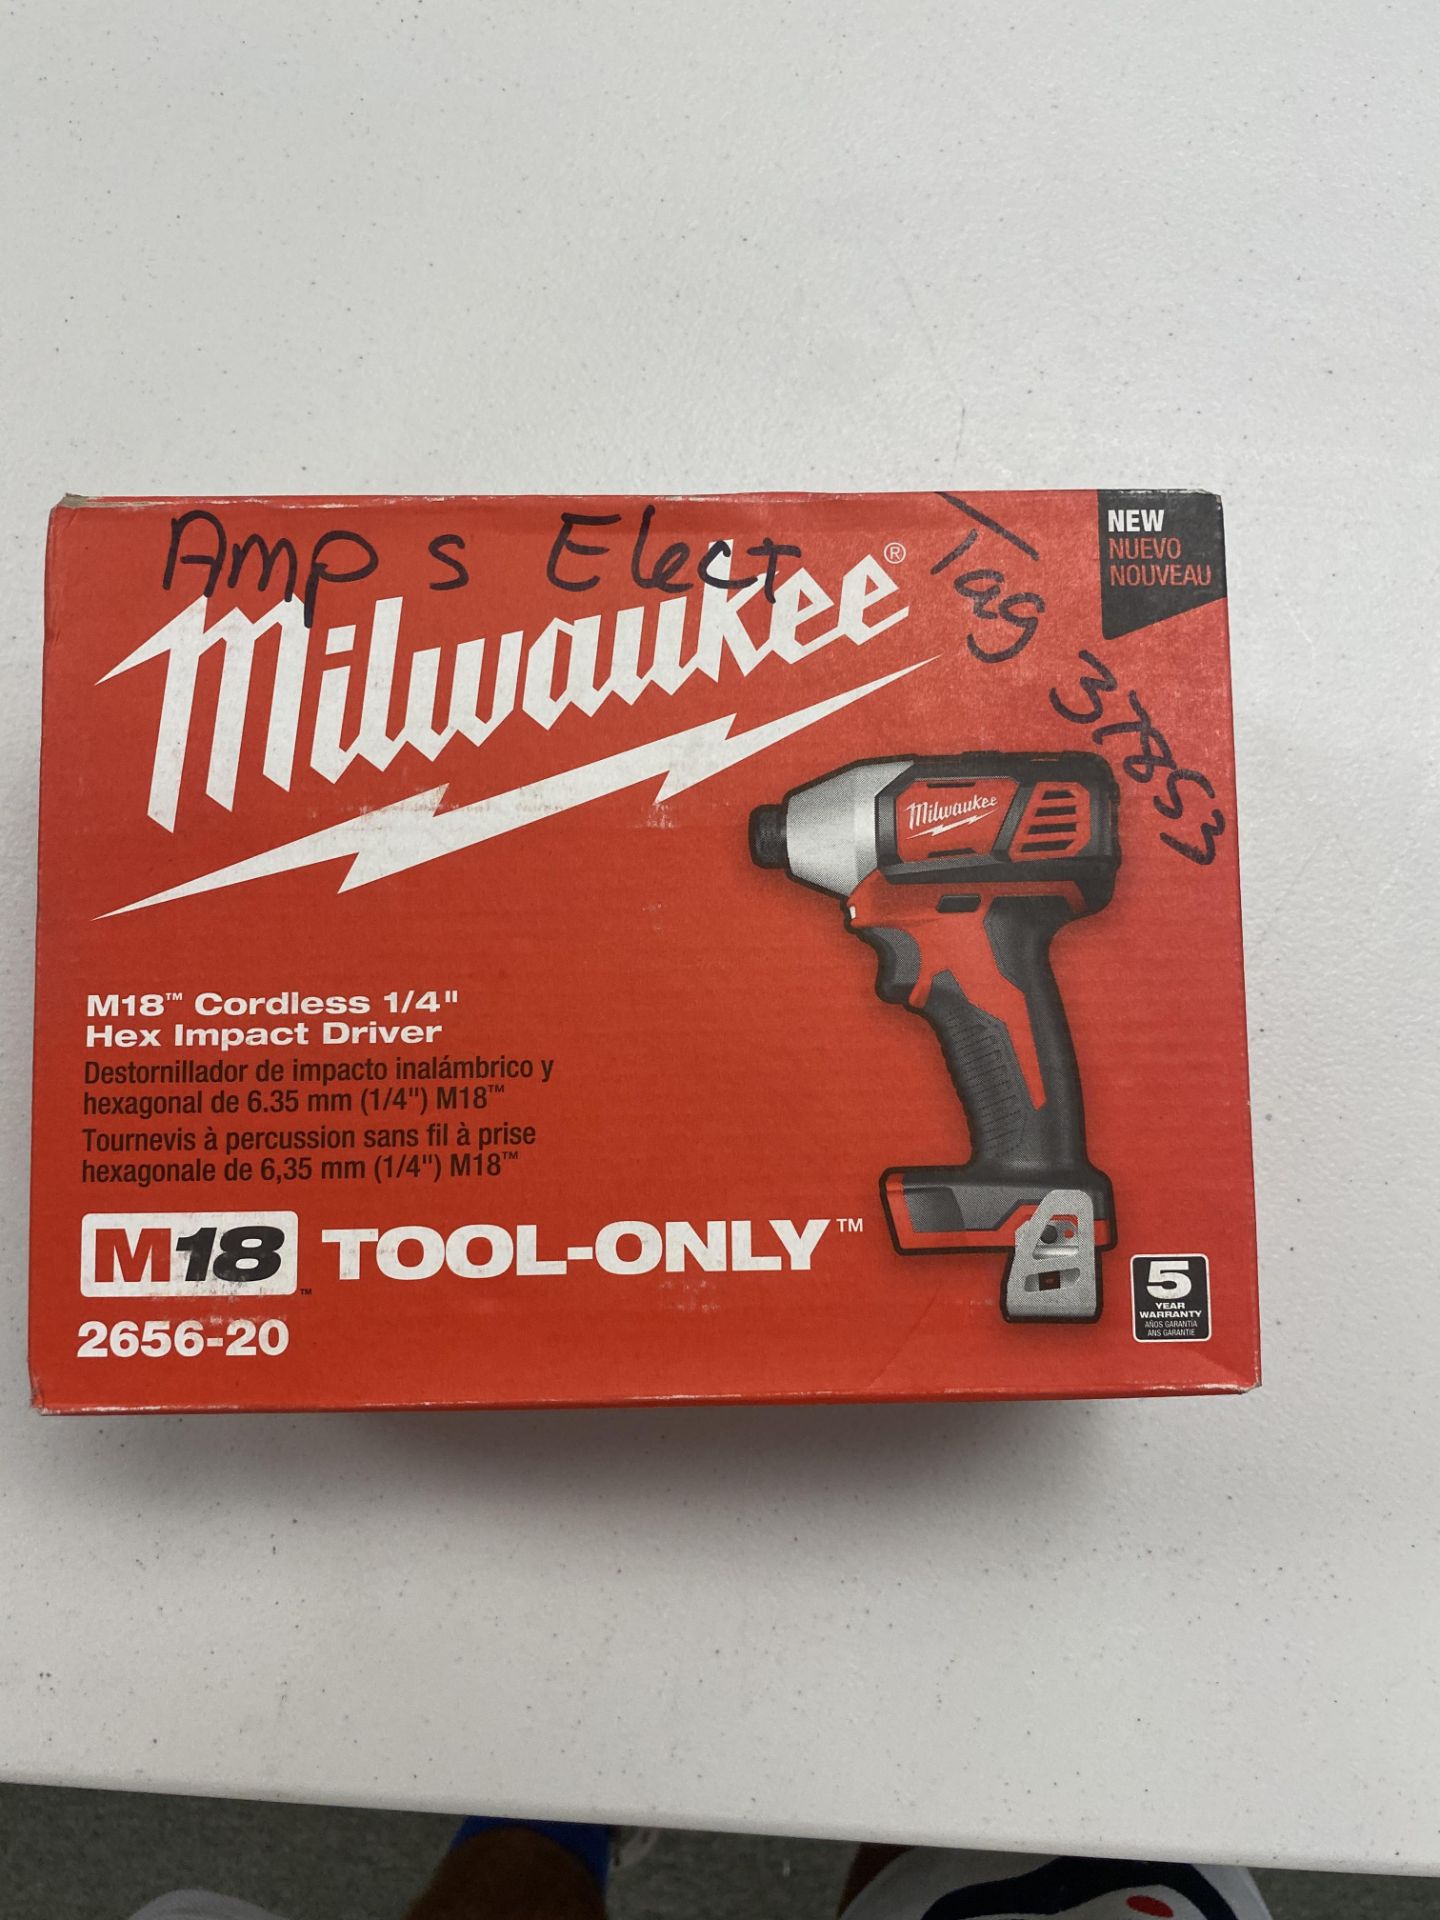 (NIB) Milwaukee Cordless 1/4" Hex Impact Driver M18 (Tool Only) #2656-20